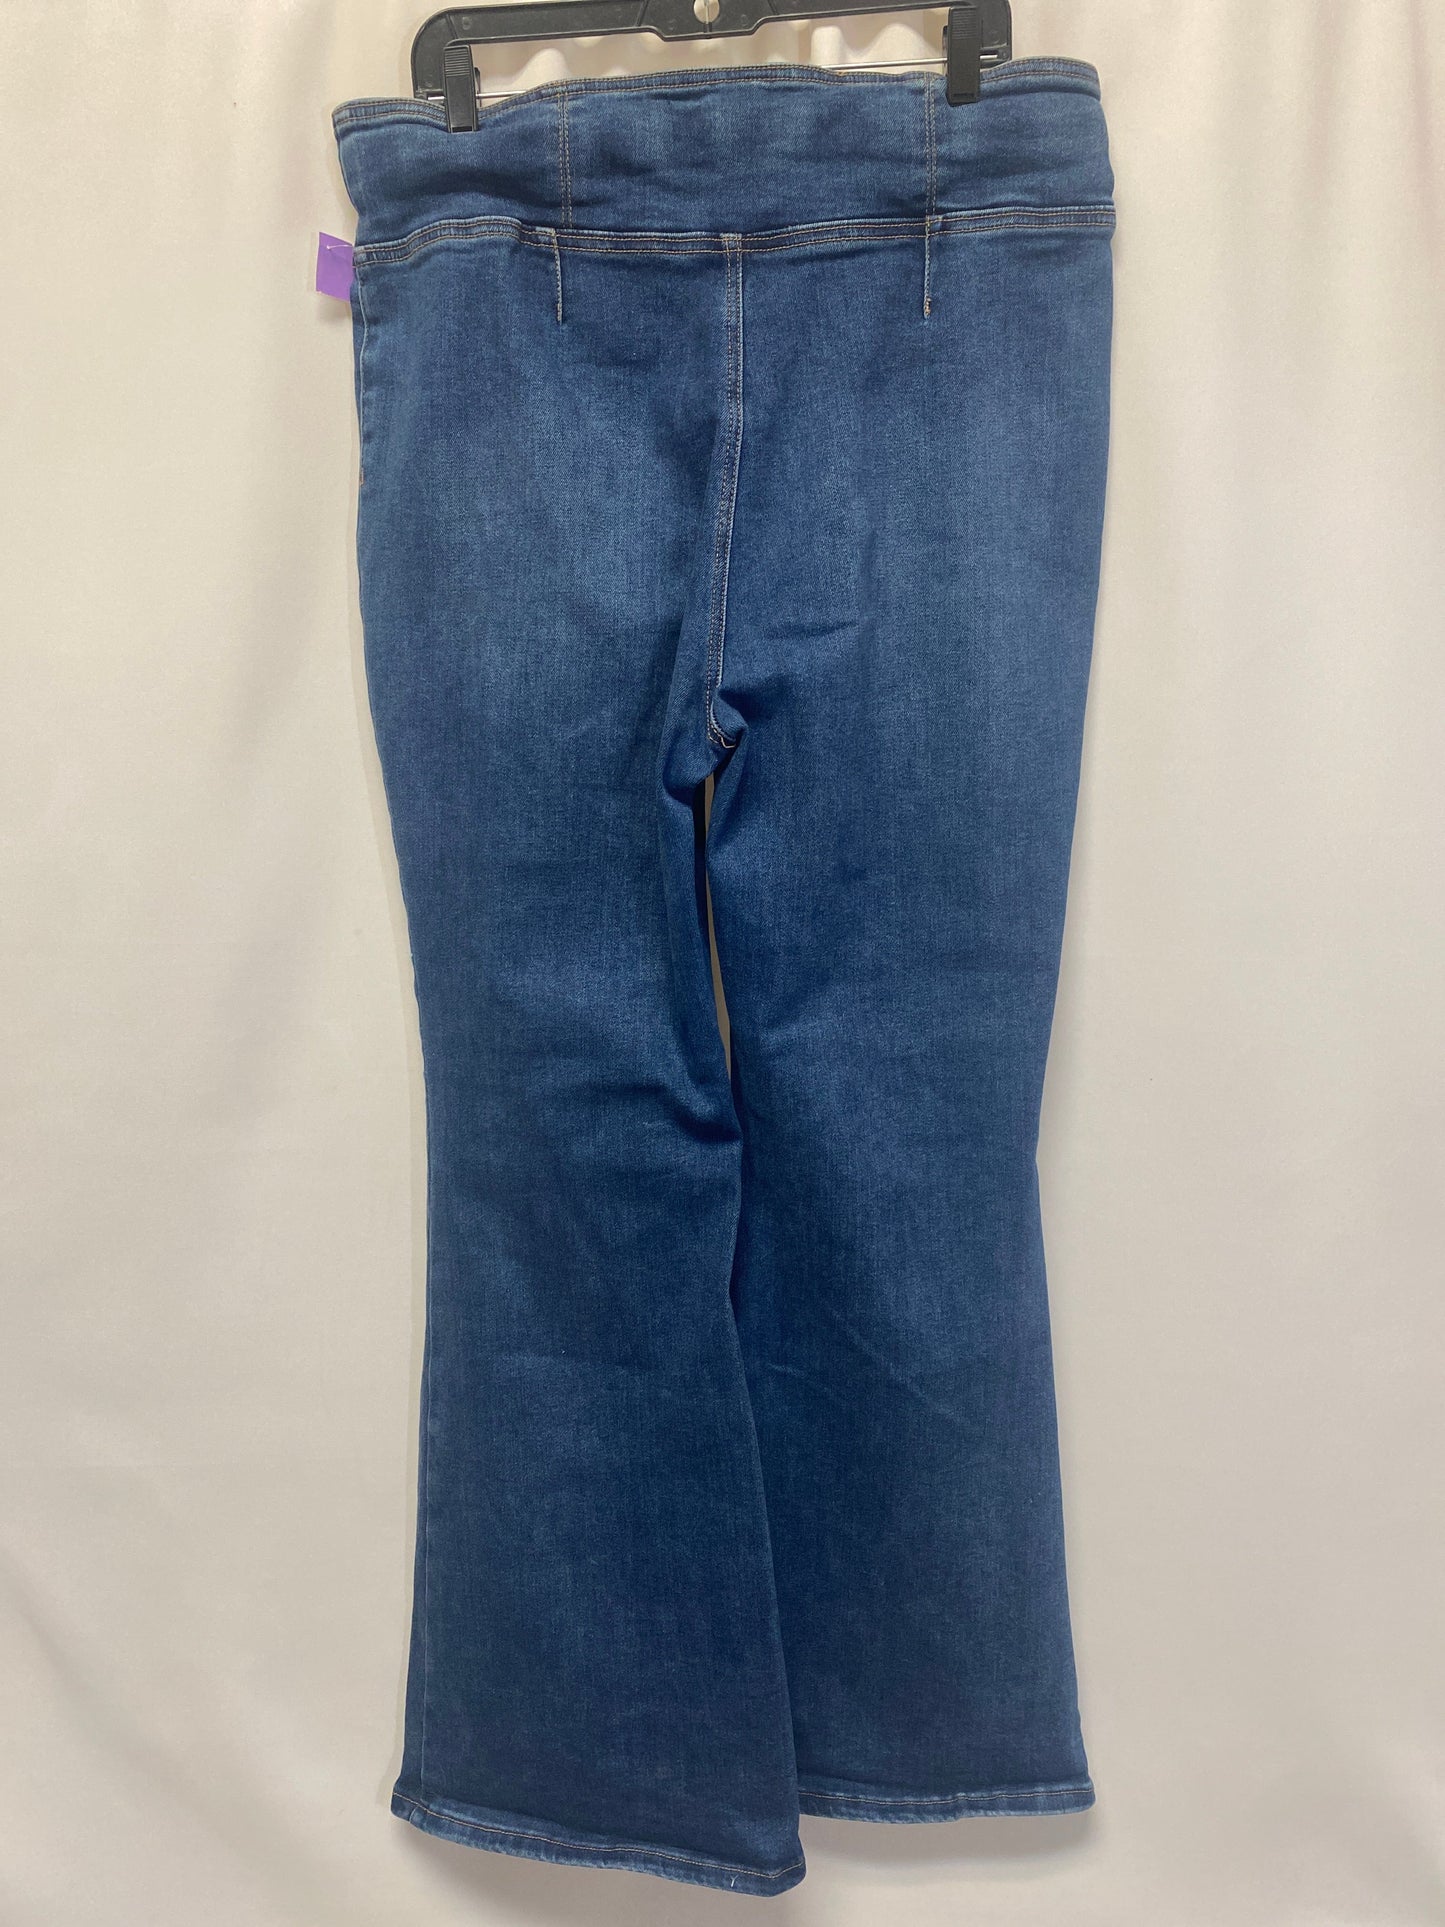 Blue Denim Jeans Boot Cut Risen, Size 1x